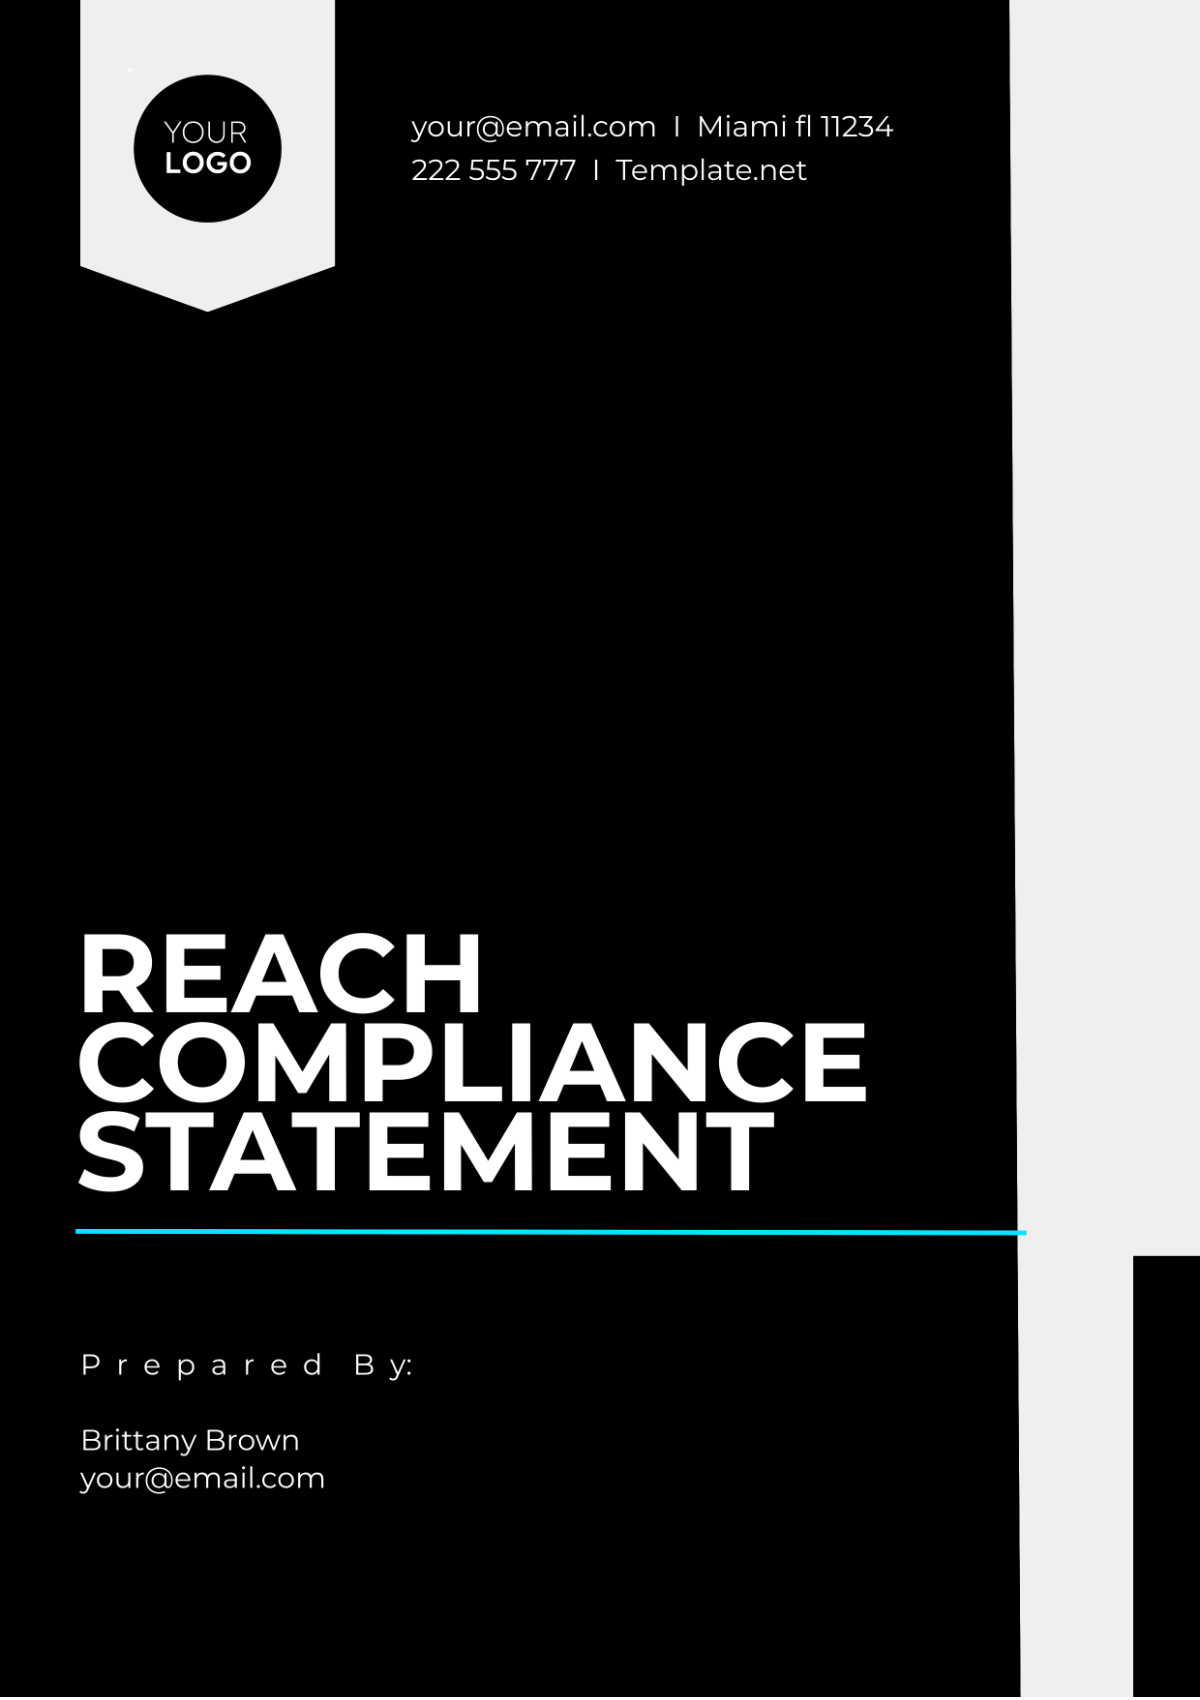 Reach Compliance Statement Template